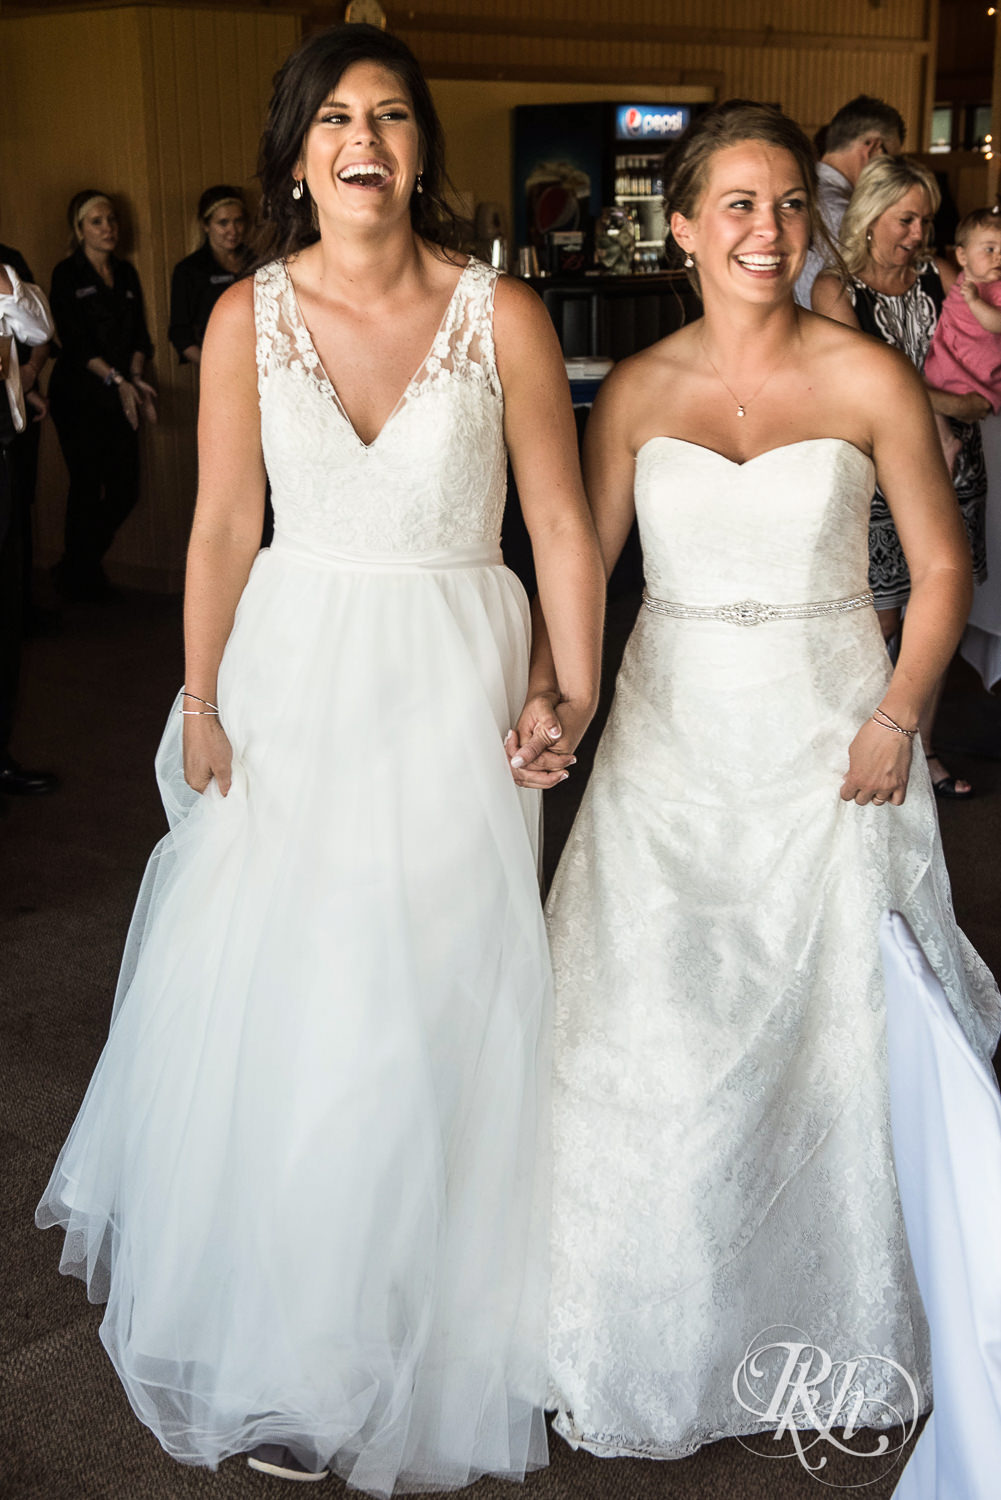 Lesbian brides enter their wedding reception at Spirit Mountain in Duluth, Minnesota.